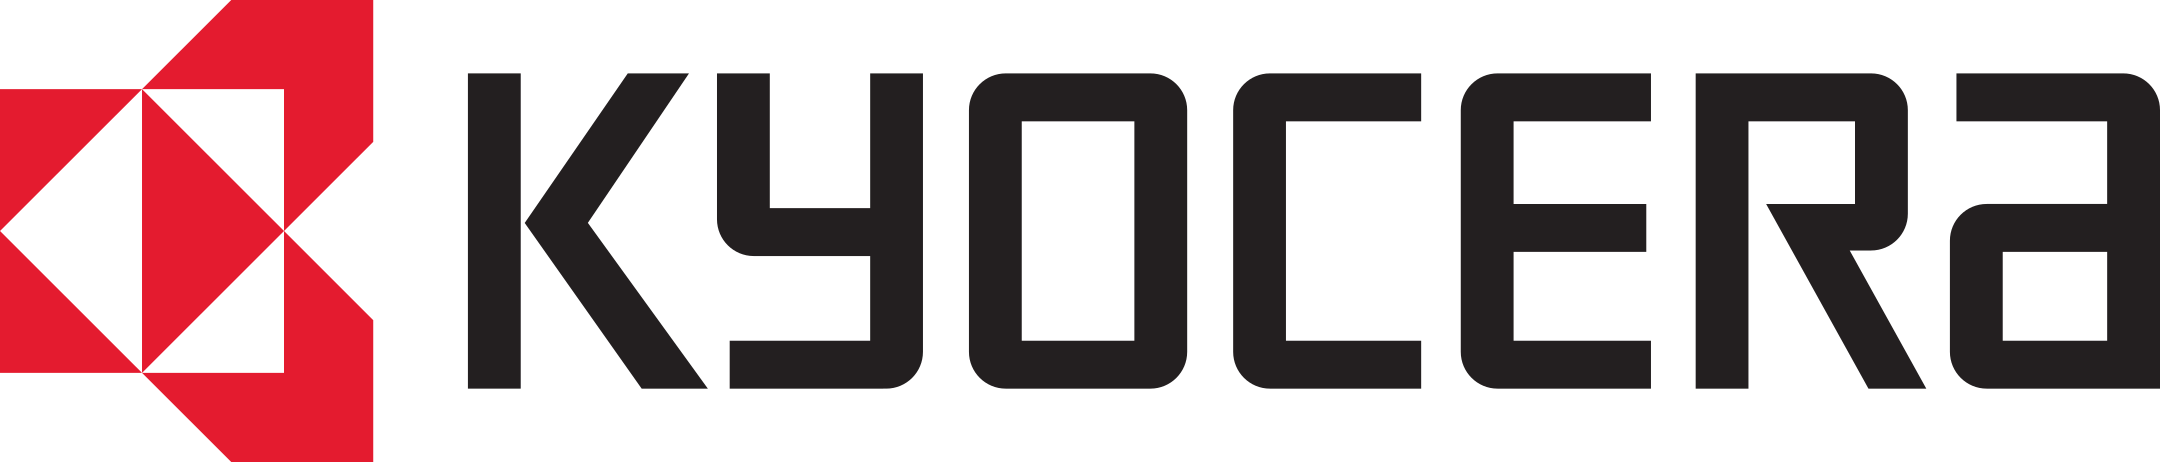 kyocera logo 1 - Kyocera Logo